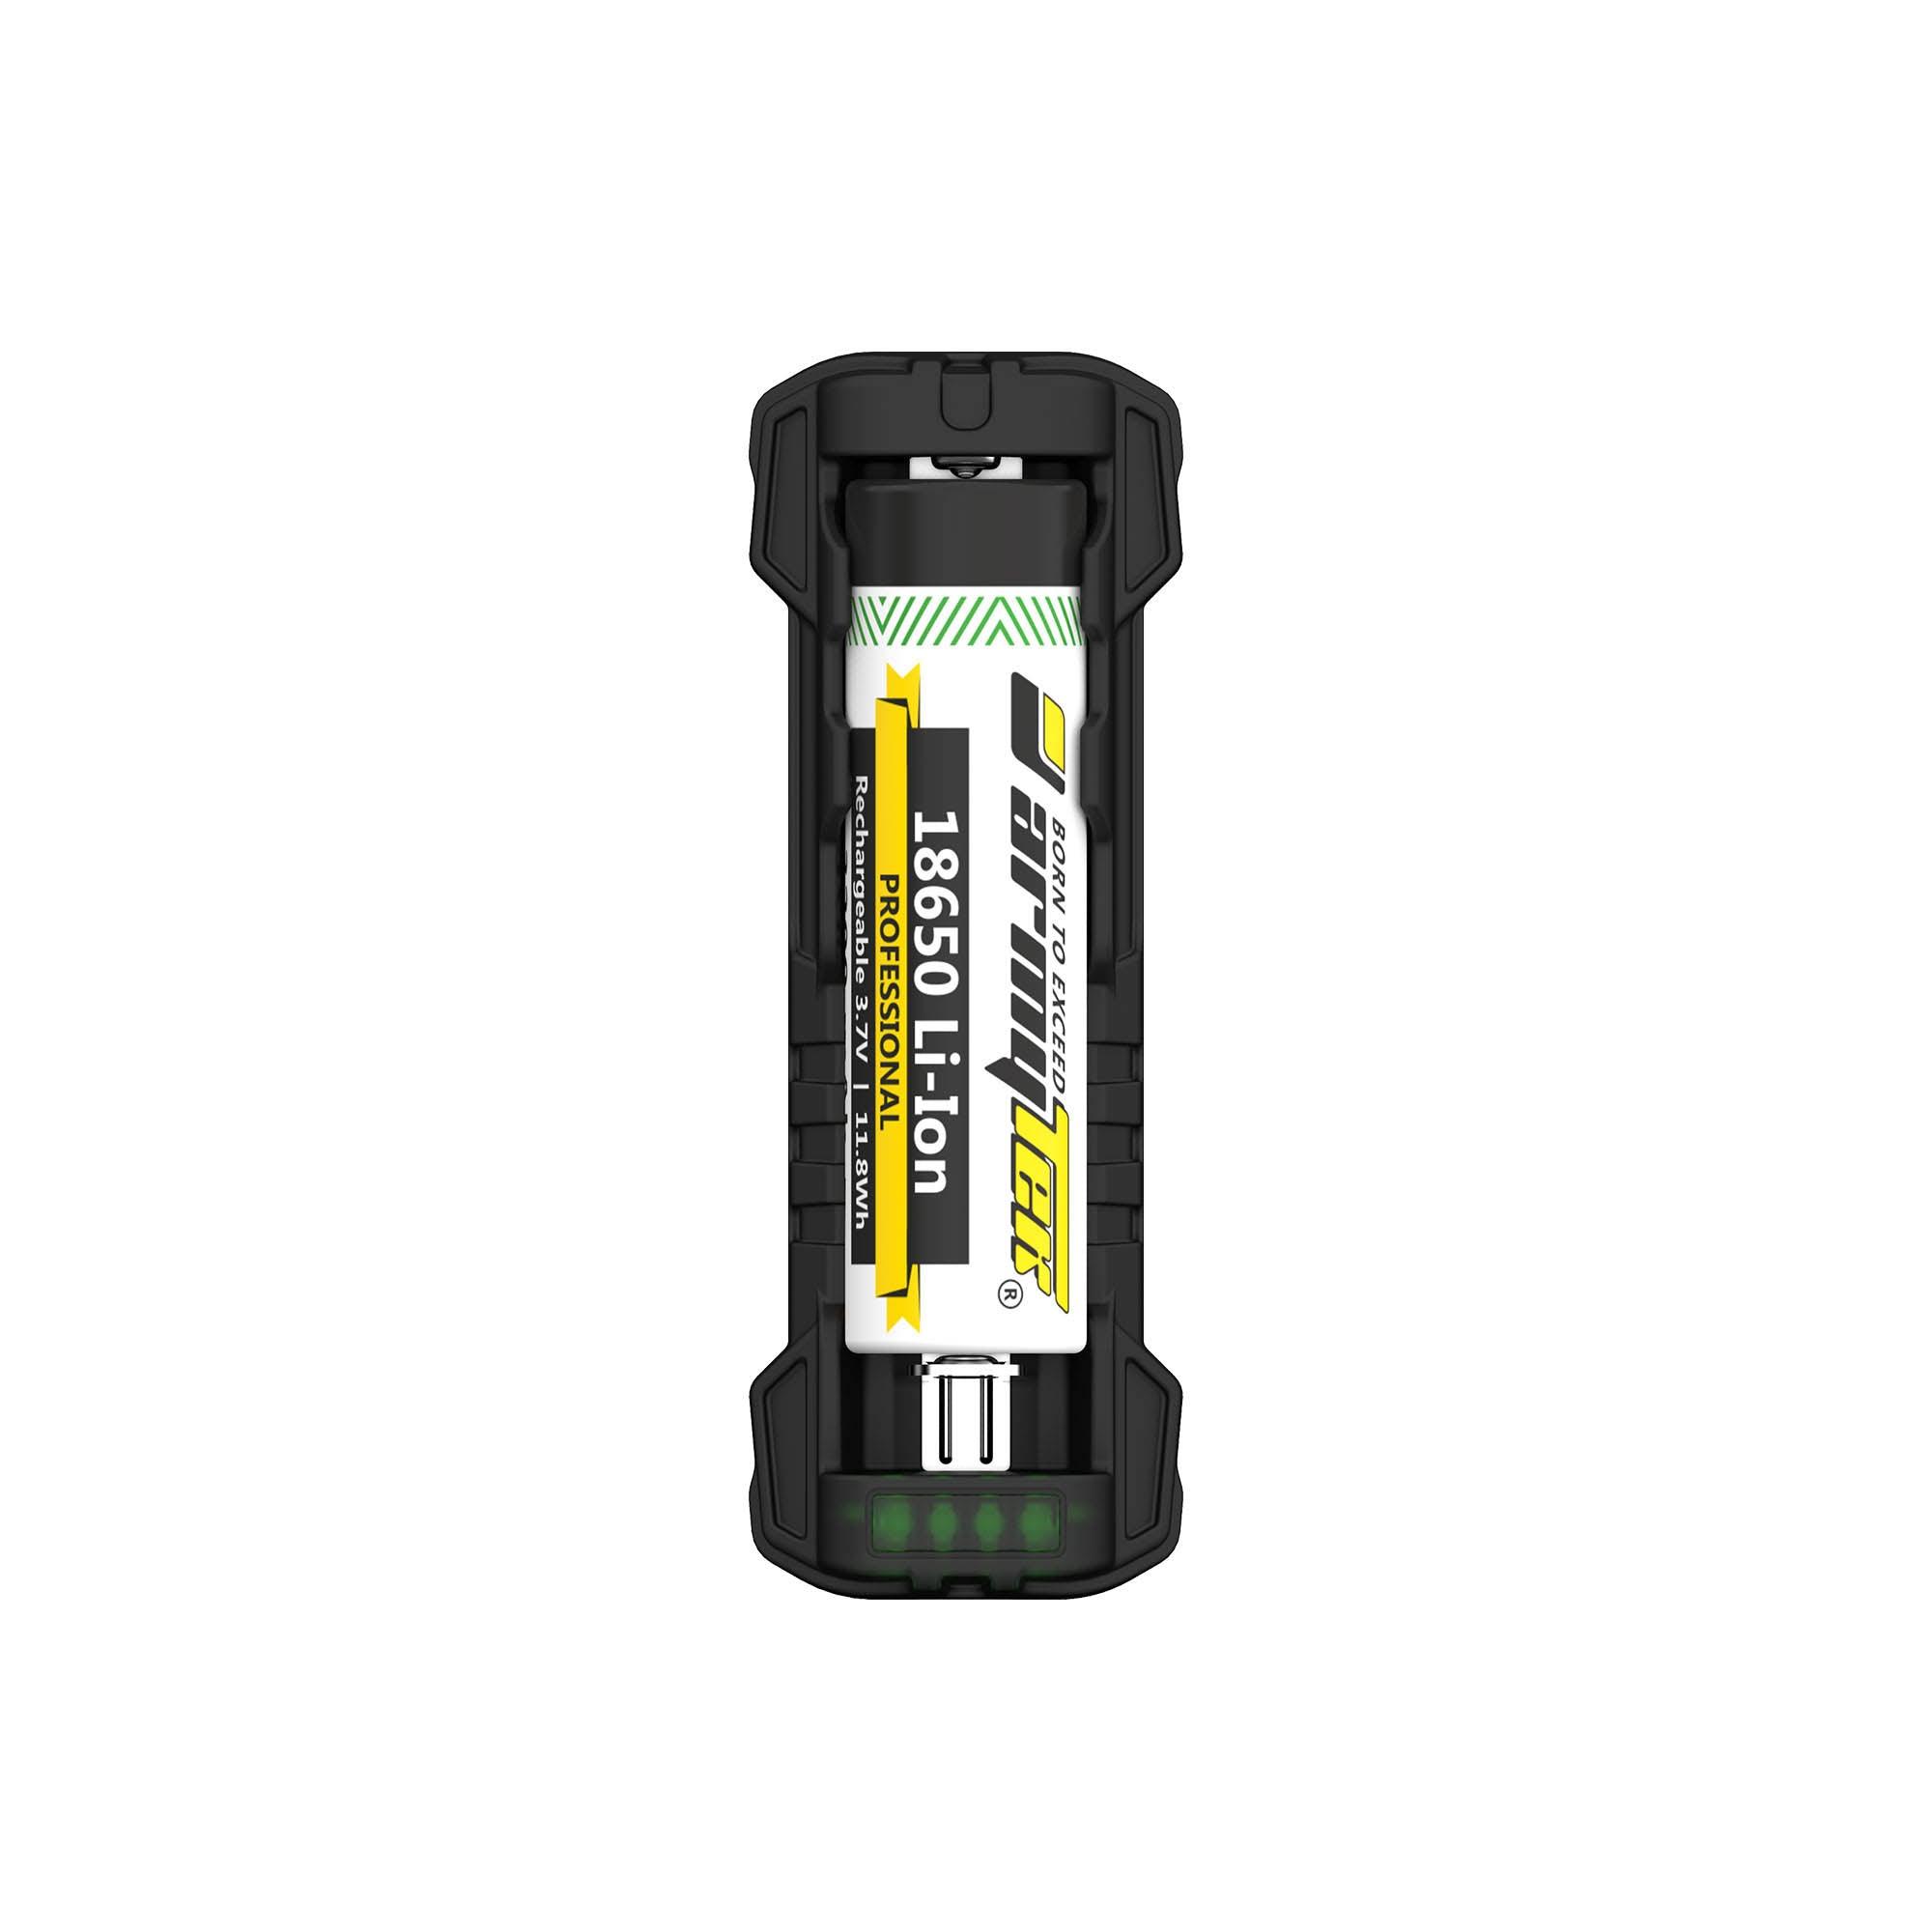 Armytek Batterie / Handy Ladegerät C1 PRO